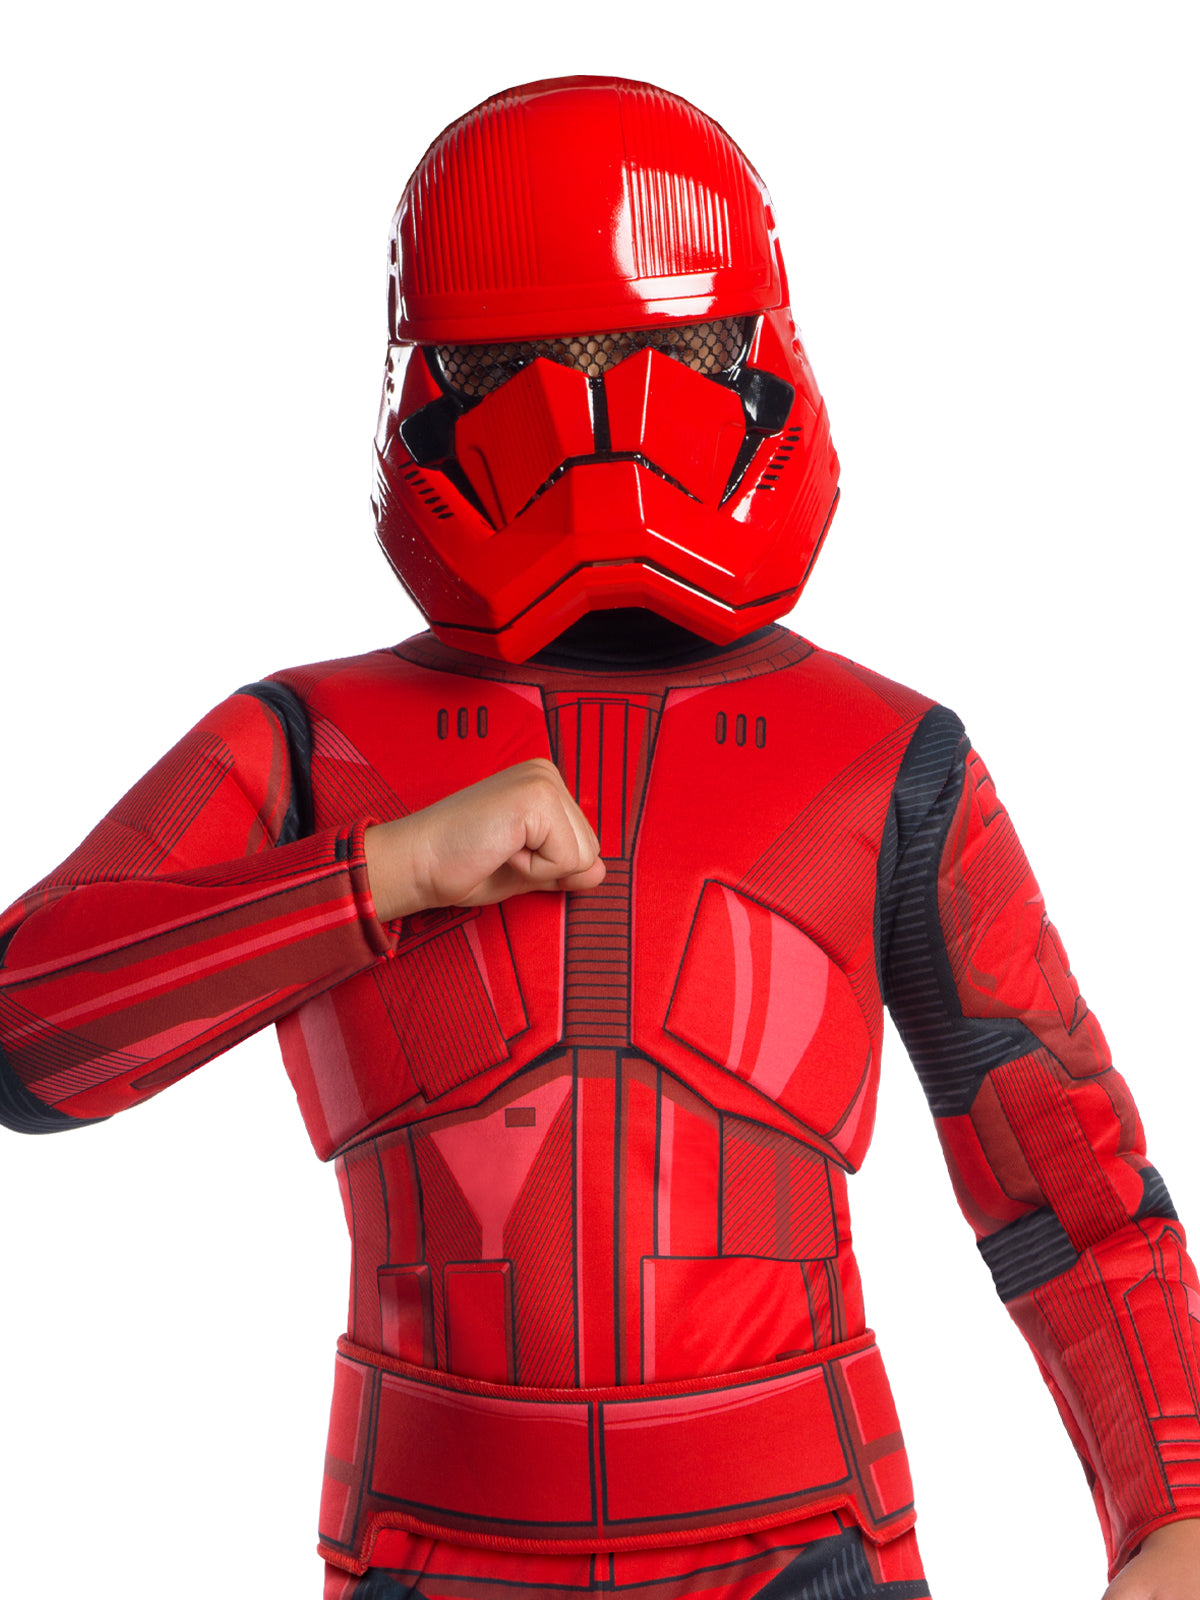 Star Wars Sith Trooper Deluxe Boys Costume